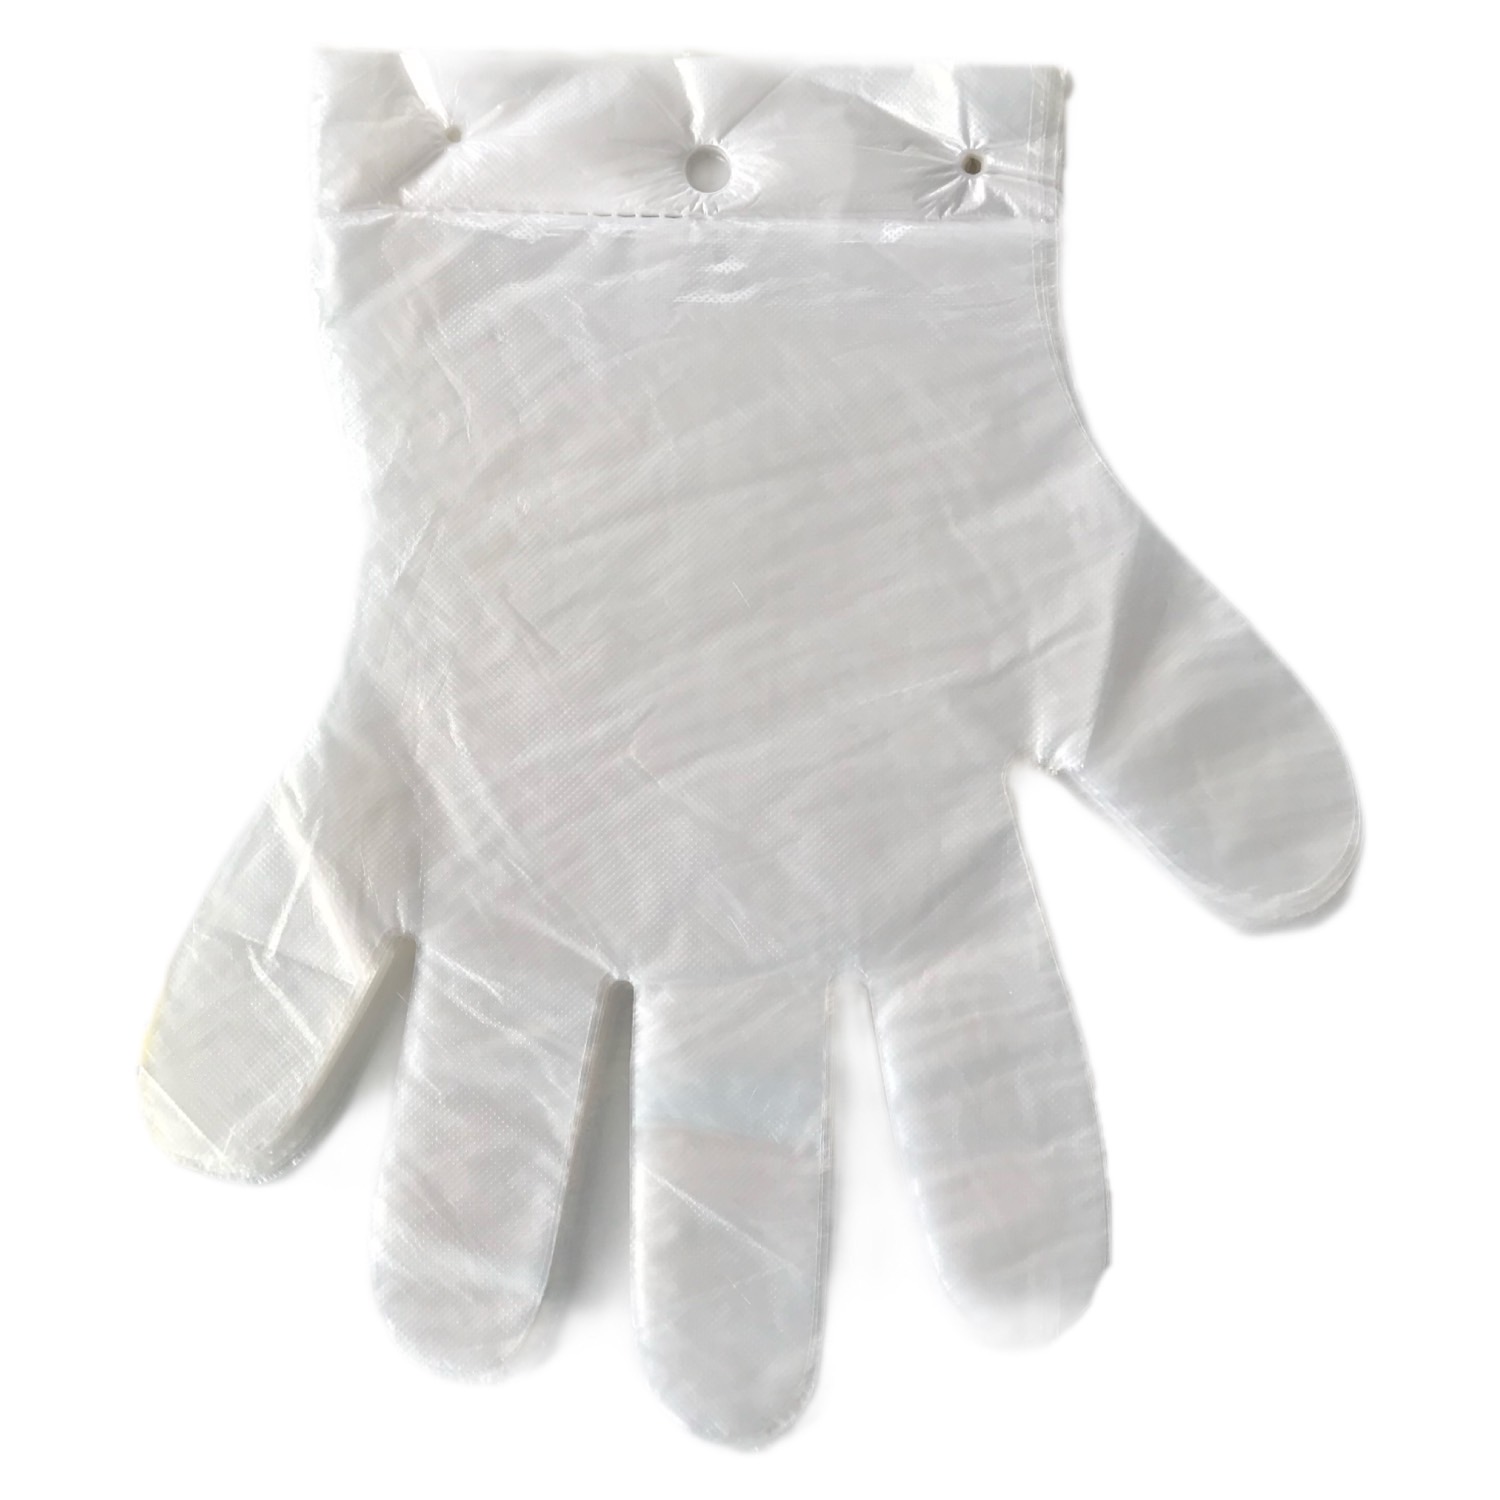 100 PCS / Pack PE Plastic Blocked Disposable Gloves